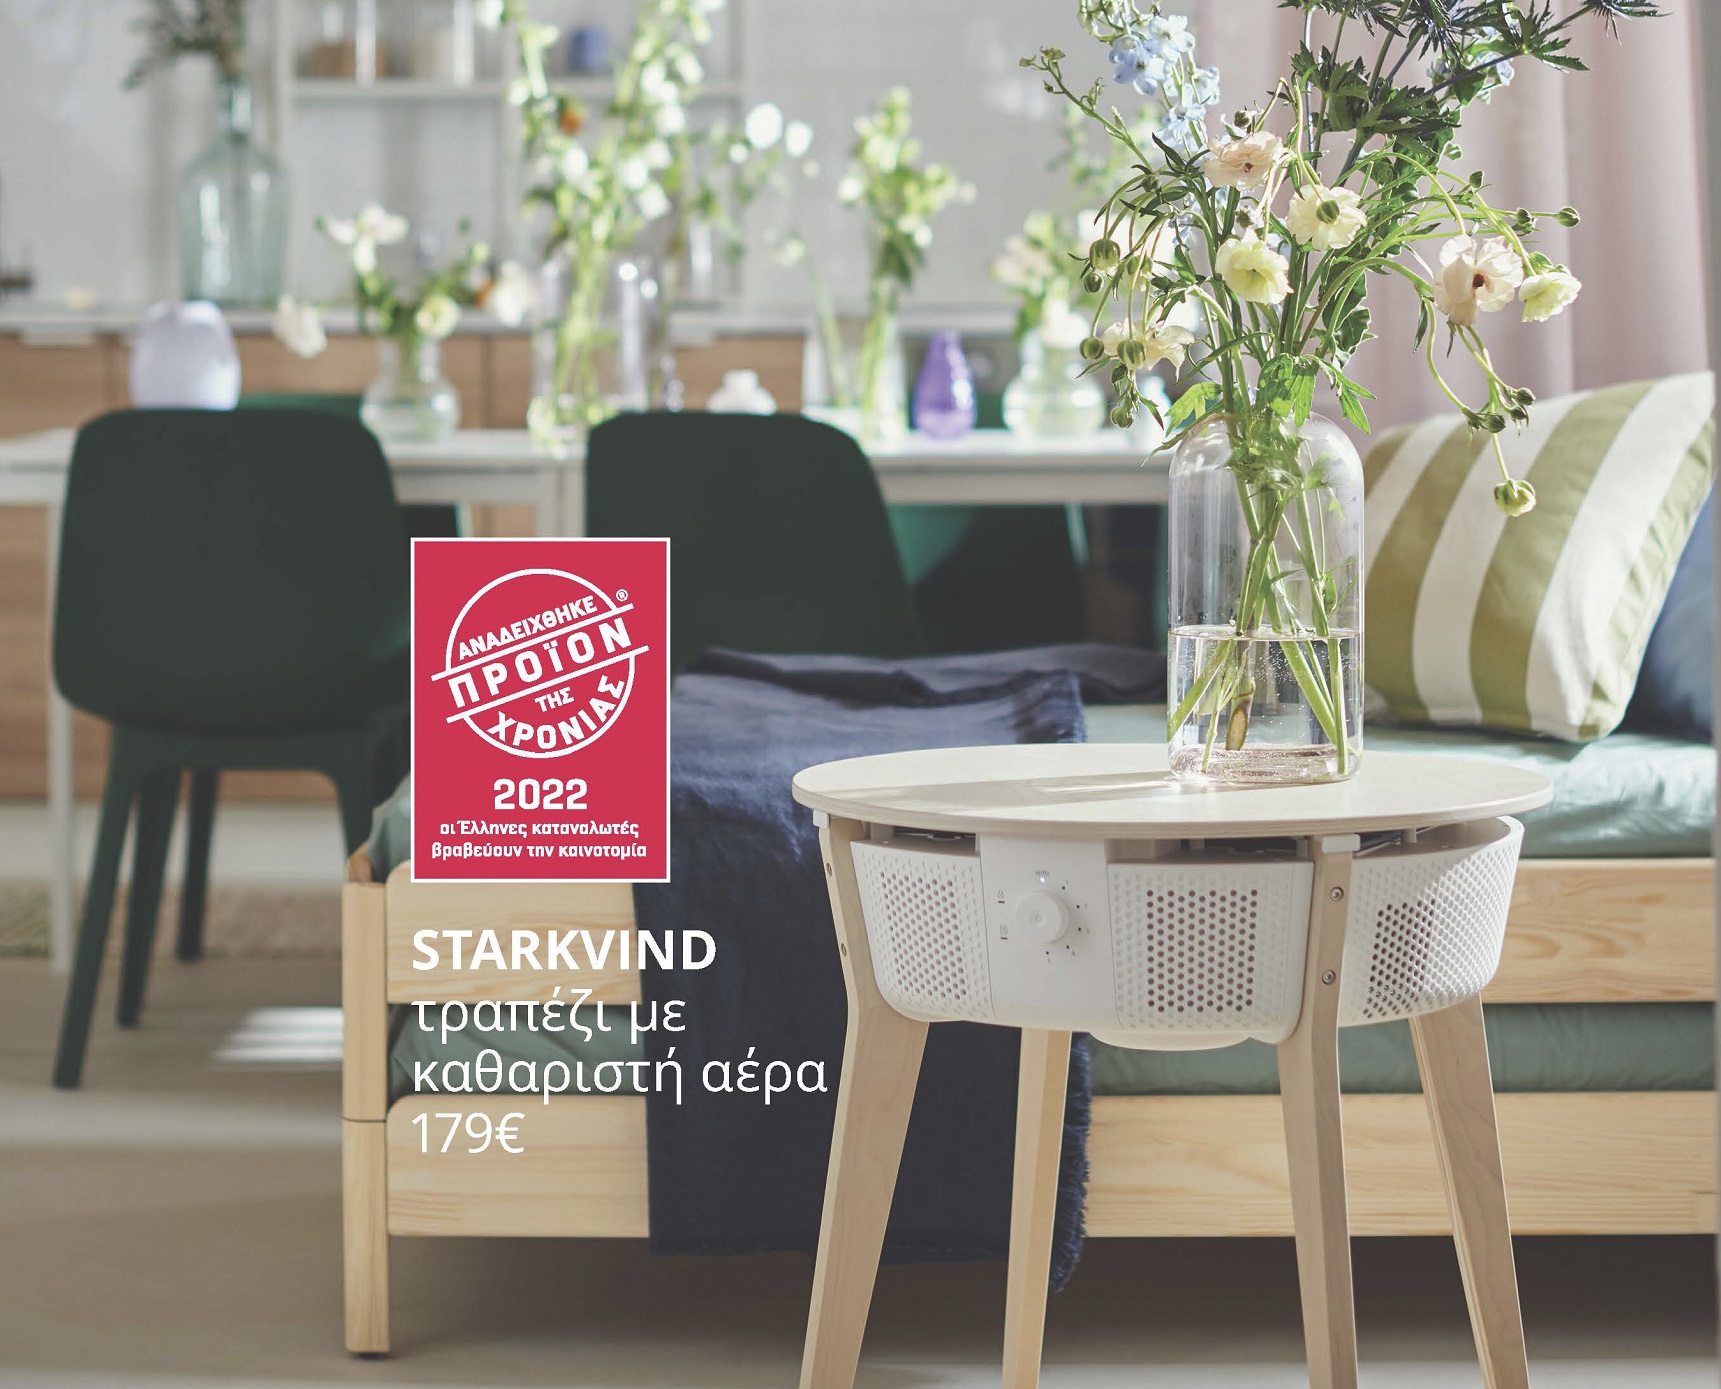 IKEA: Διπλή βράβευση για το καινοτόμο τραπέζι καθαριστή αέρα STARKVIND